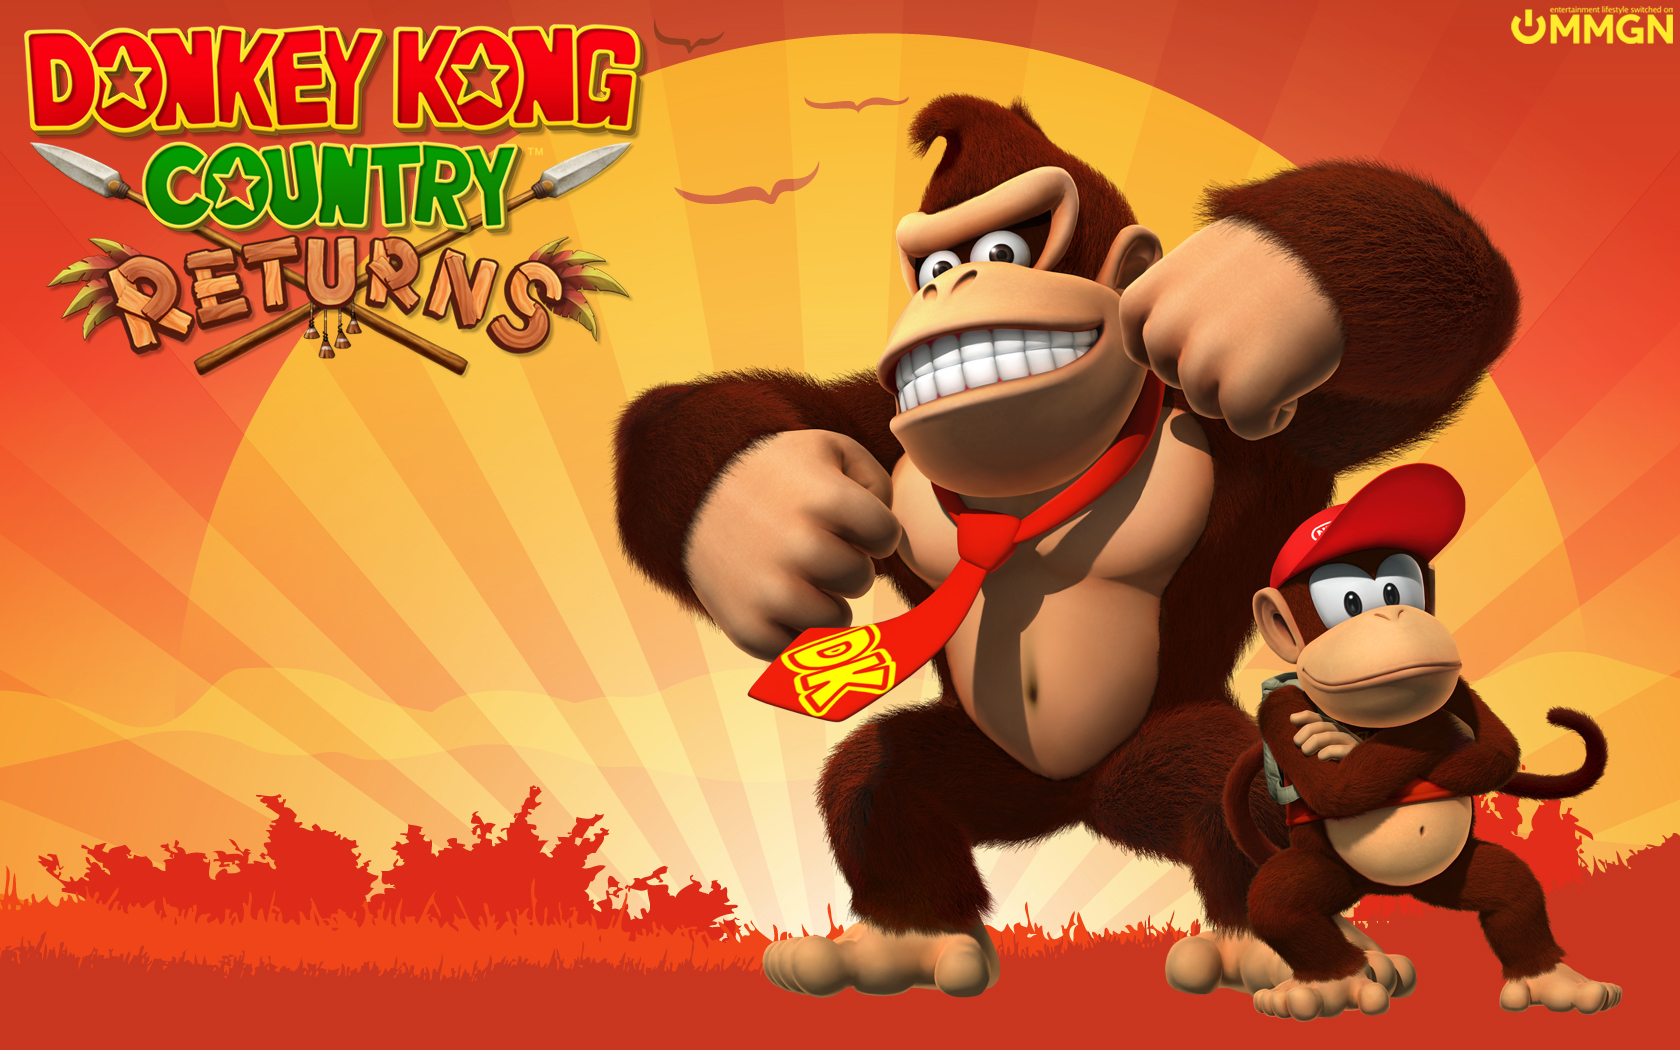 Donkey Kong Image Country Returns HD